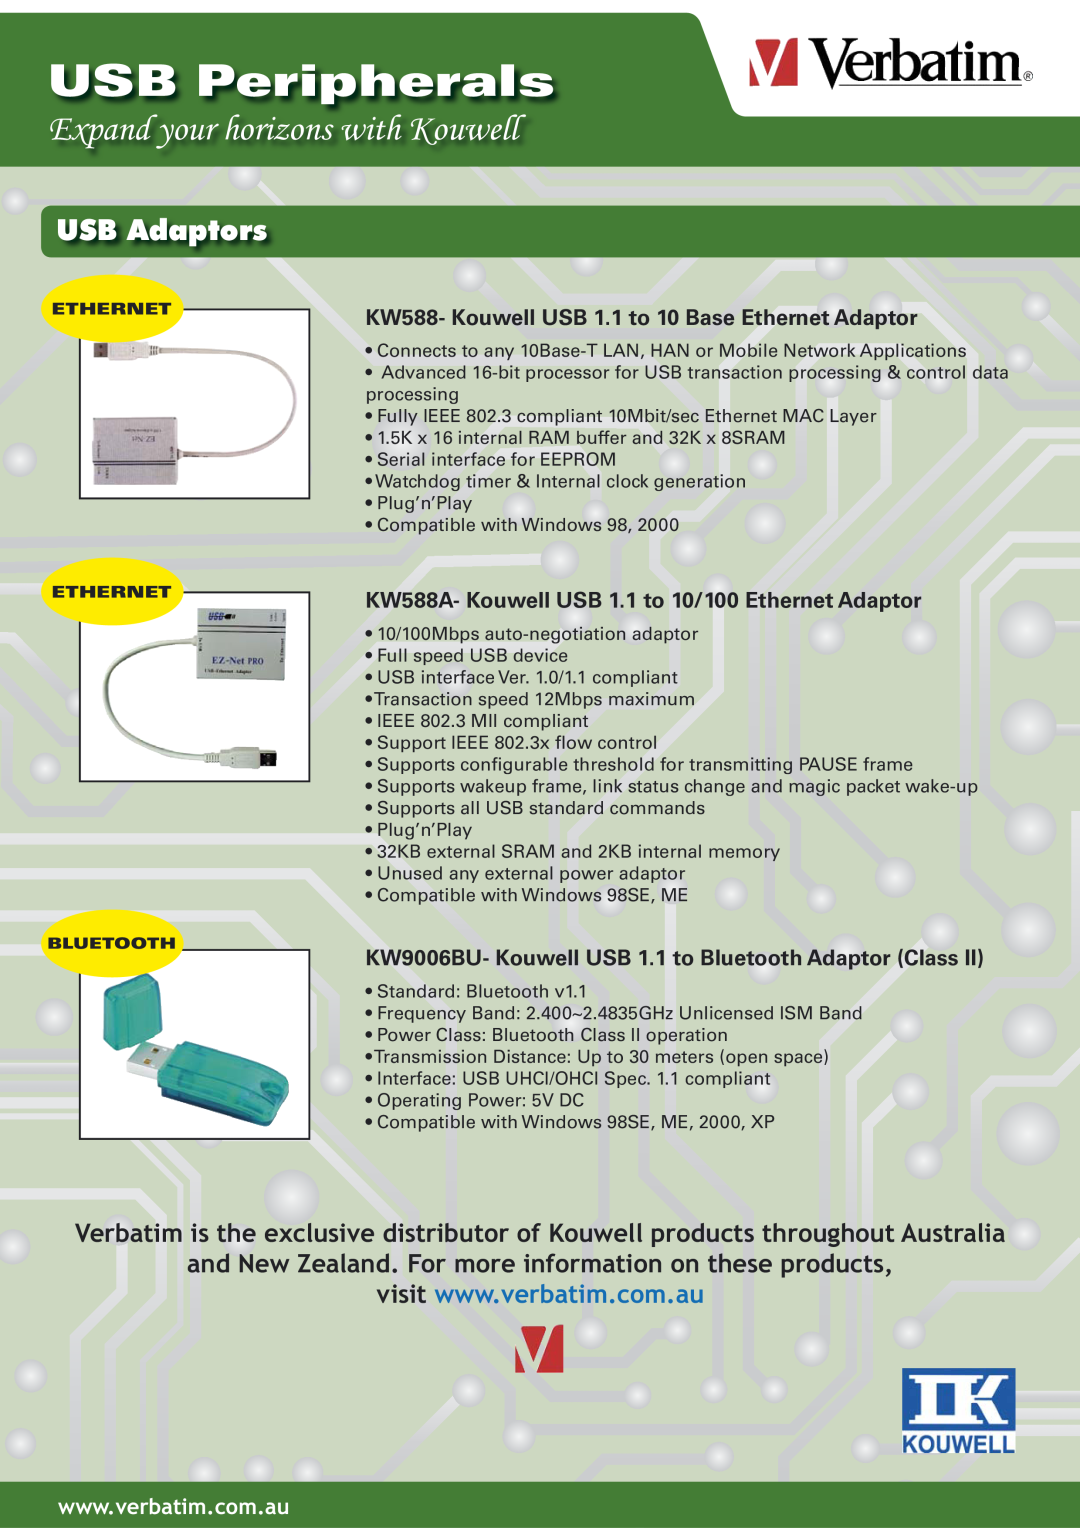 Verbatim KW2580E2, KW20022, KWL2580E manual USB Adaptors, KW588- Kouwell USB 1.1 to 10 Base Ethernet Adaptor, USB Peripherals 